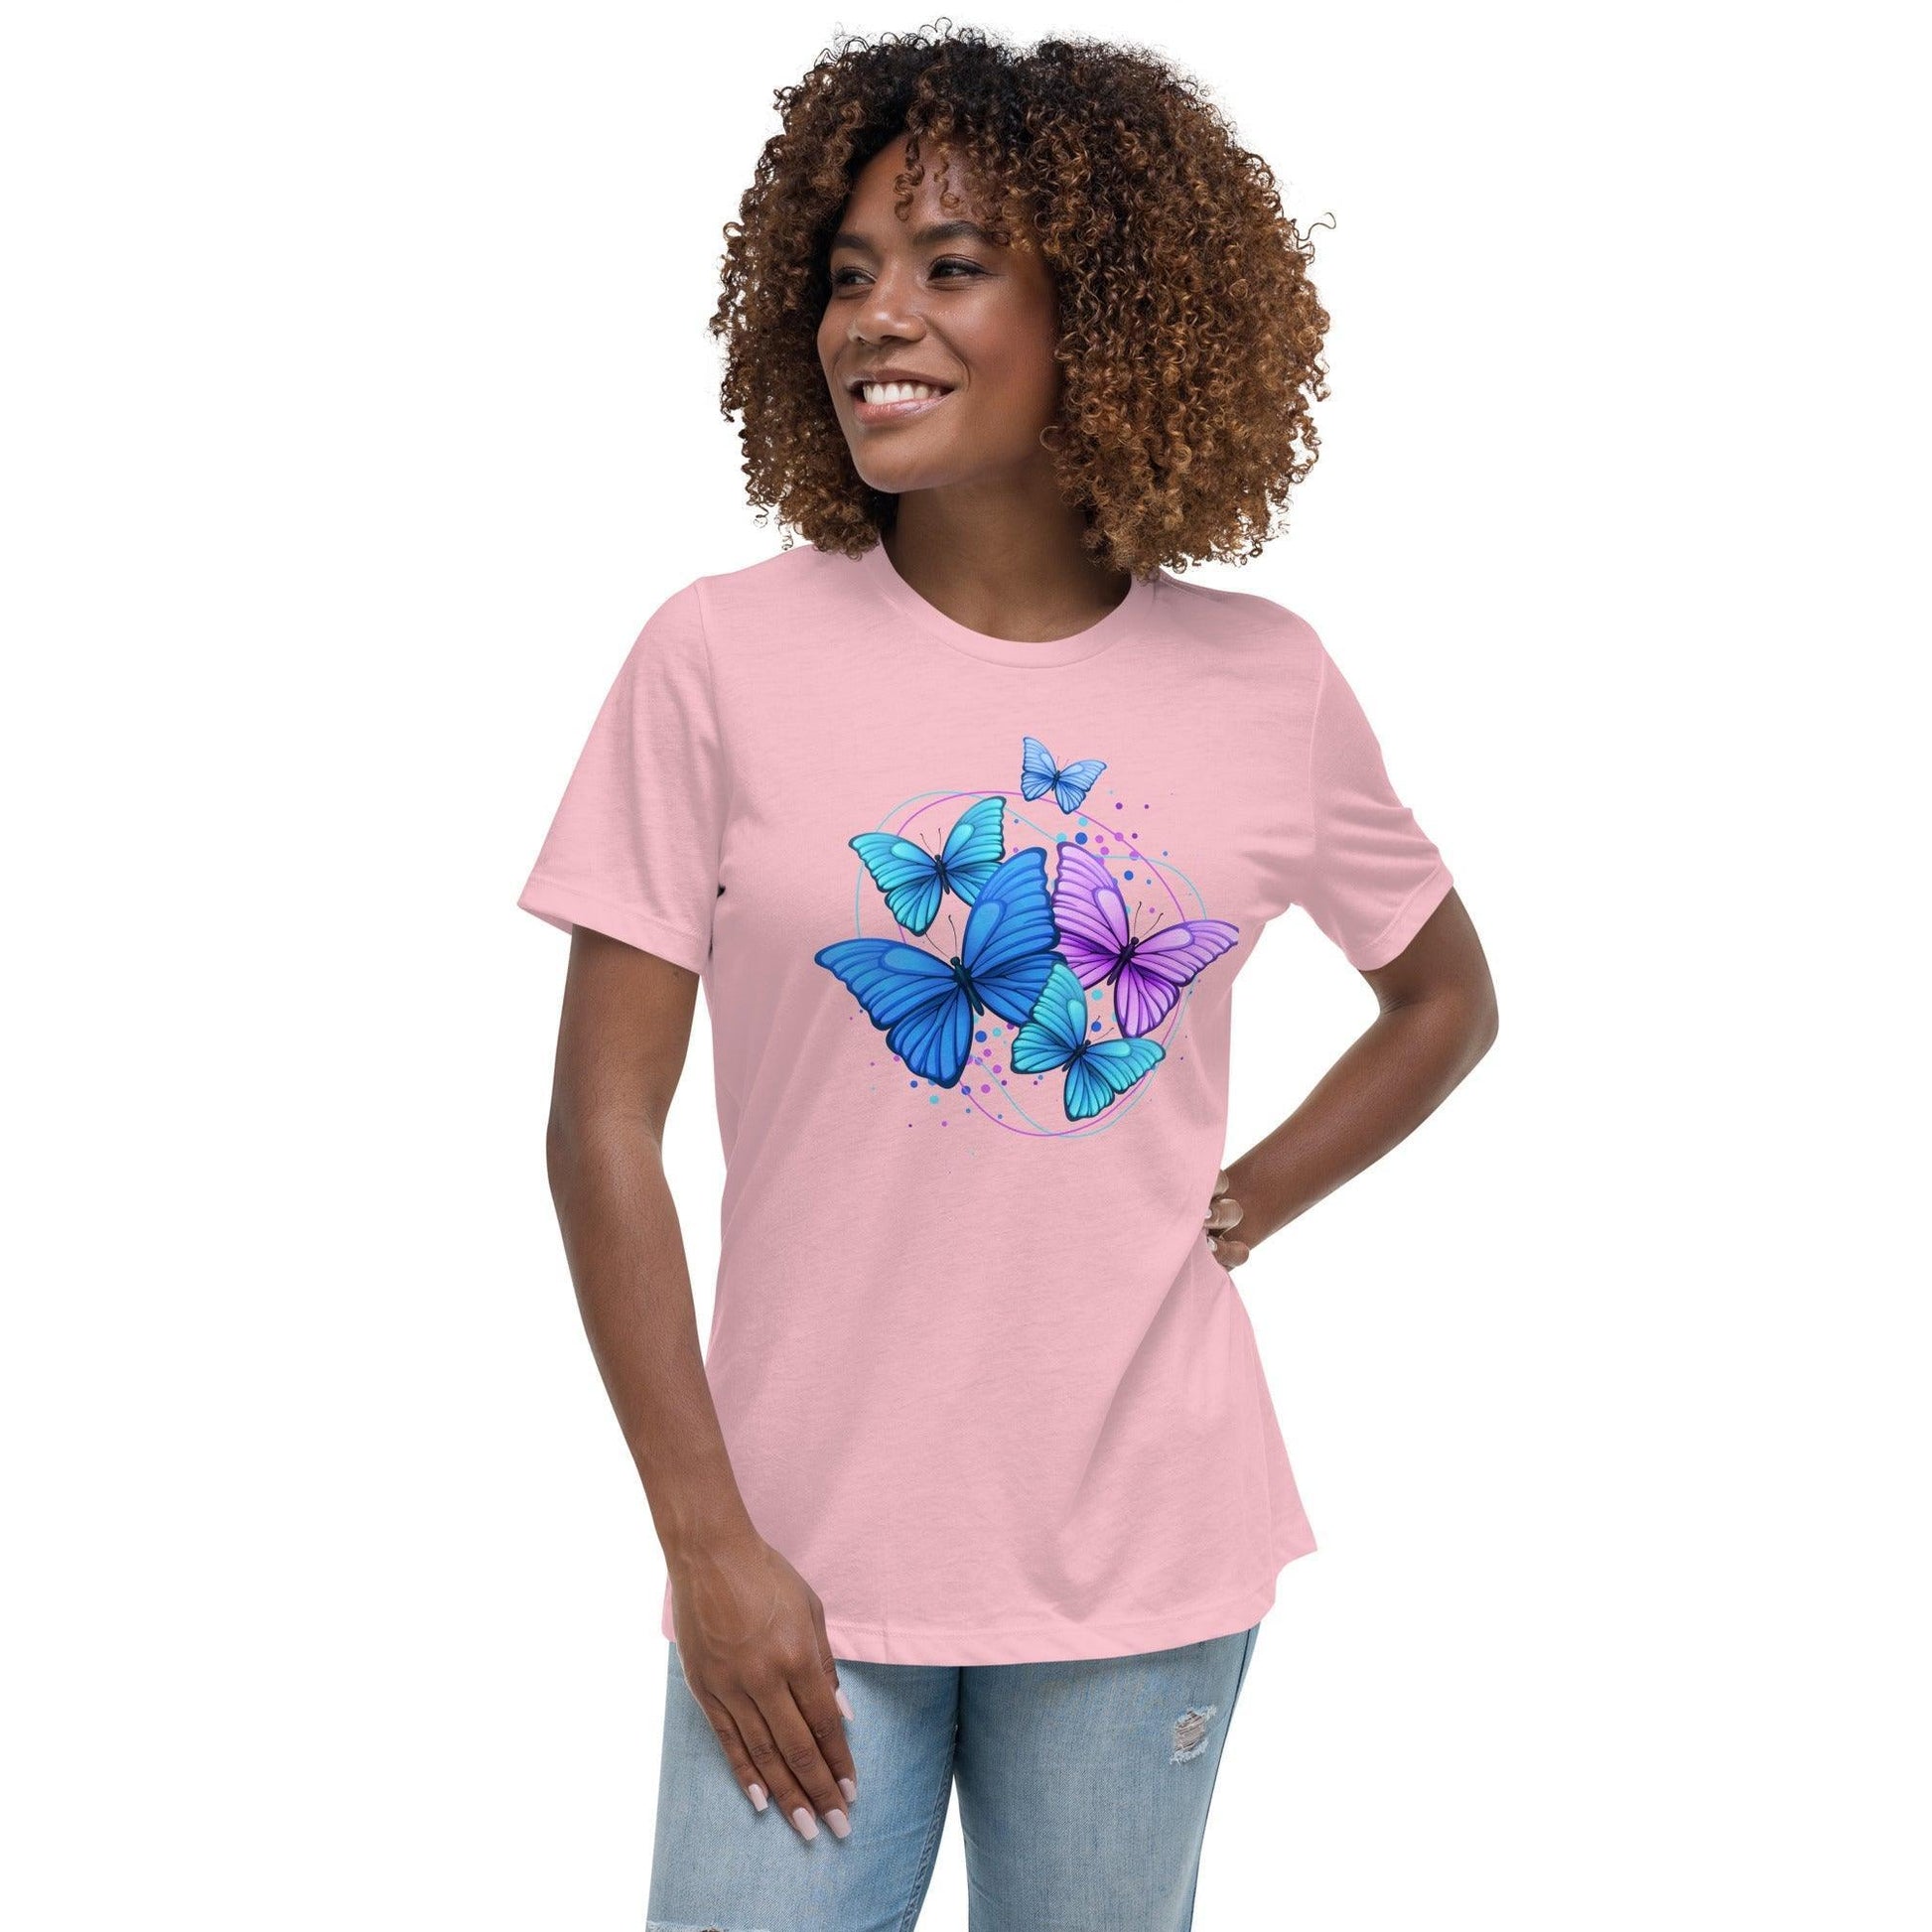 Camiseta suelta "Mariposal" | ¡La camiseta perfecta para un look alegre y femenino! - Silvornique